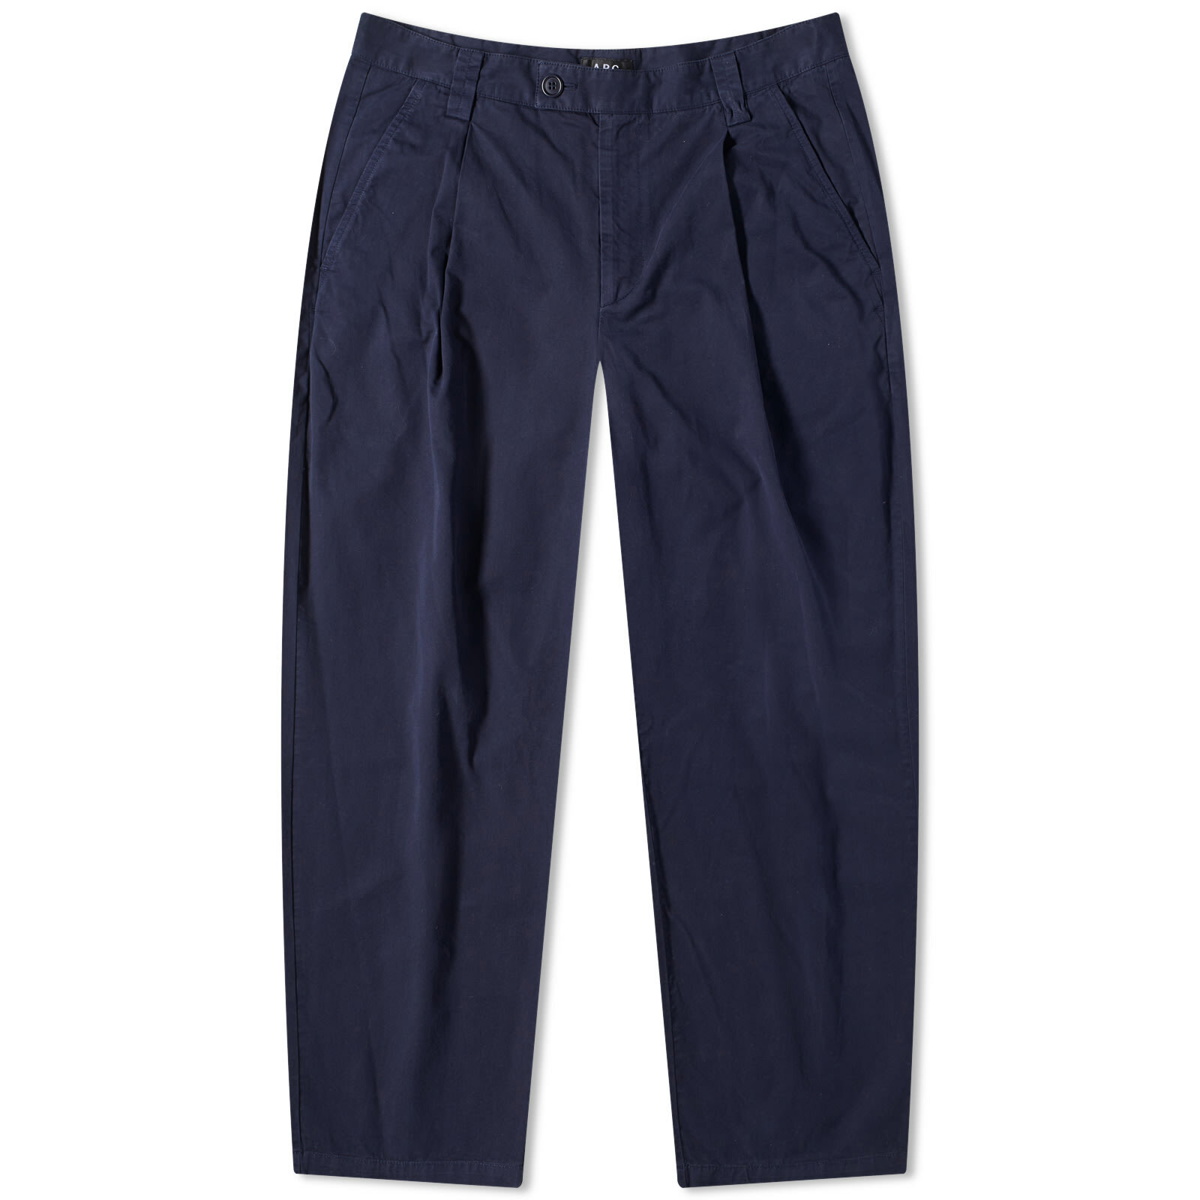 Buy Dash and Dot Men Beige Polyester Pleated Pants at Pernia'sPopUpShopMen  2023